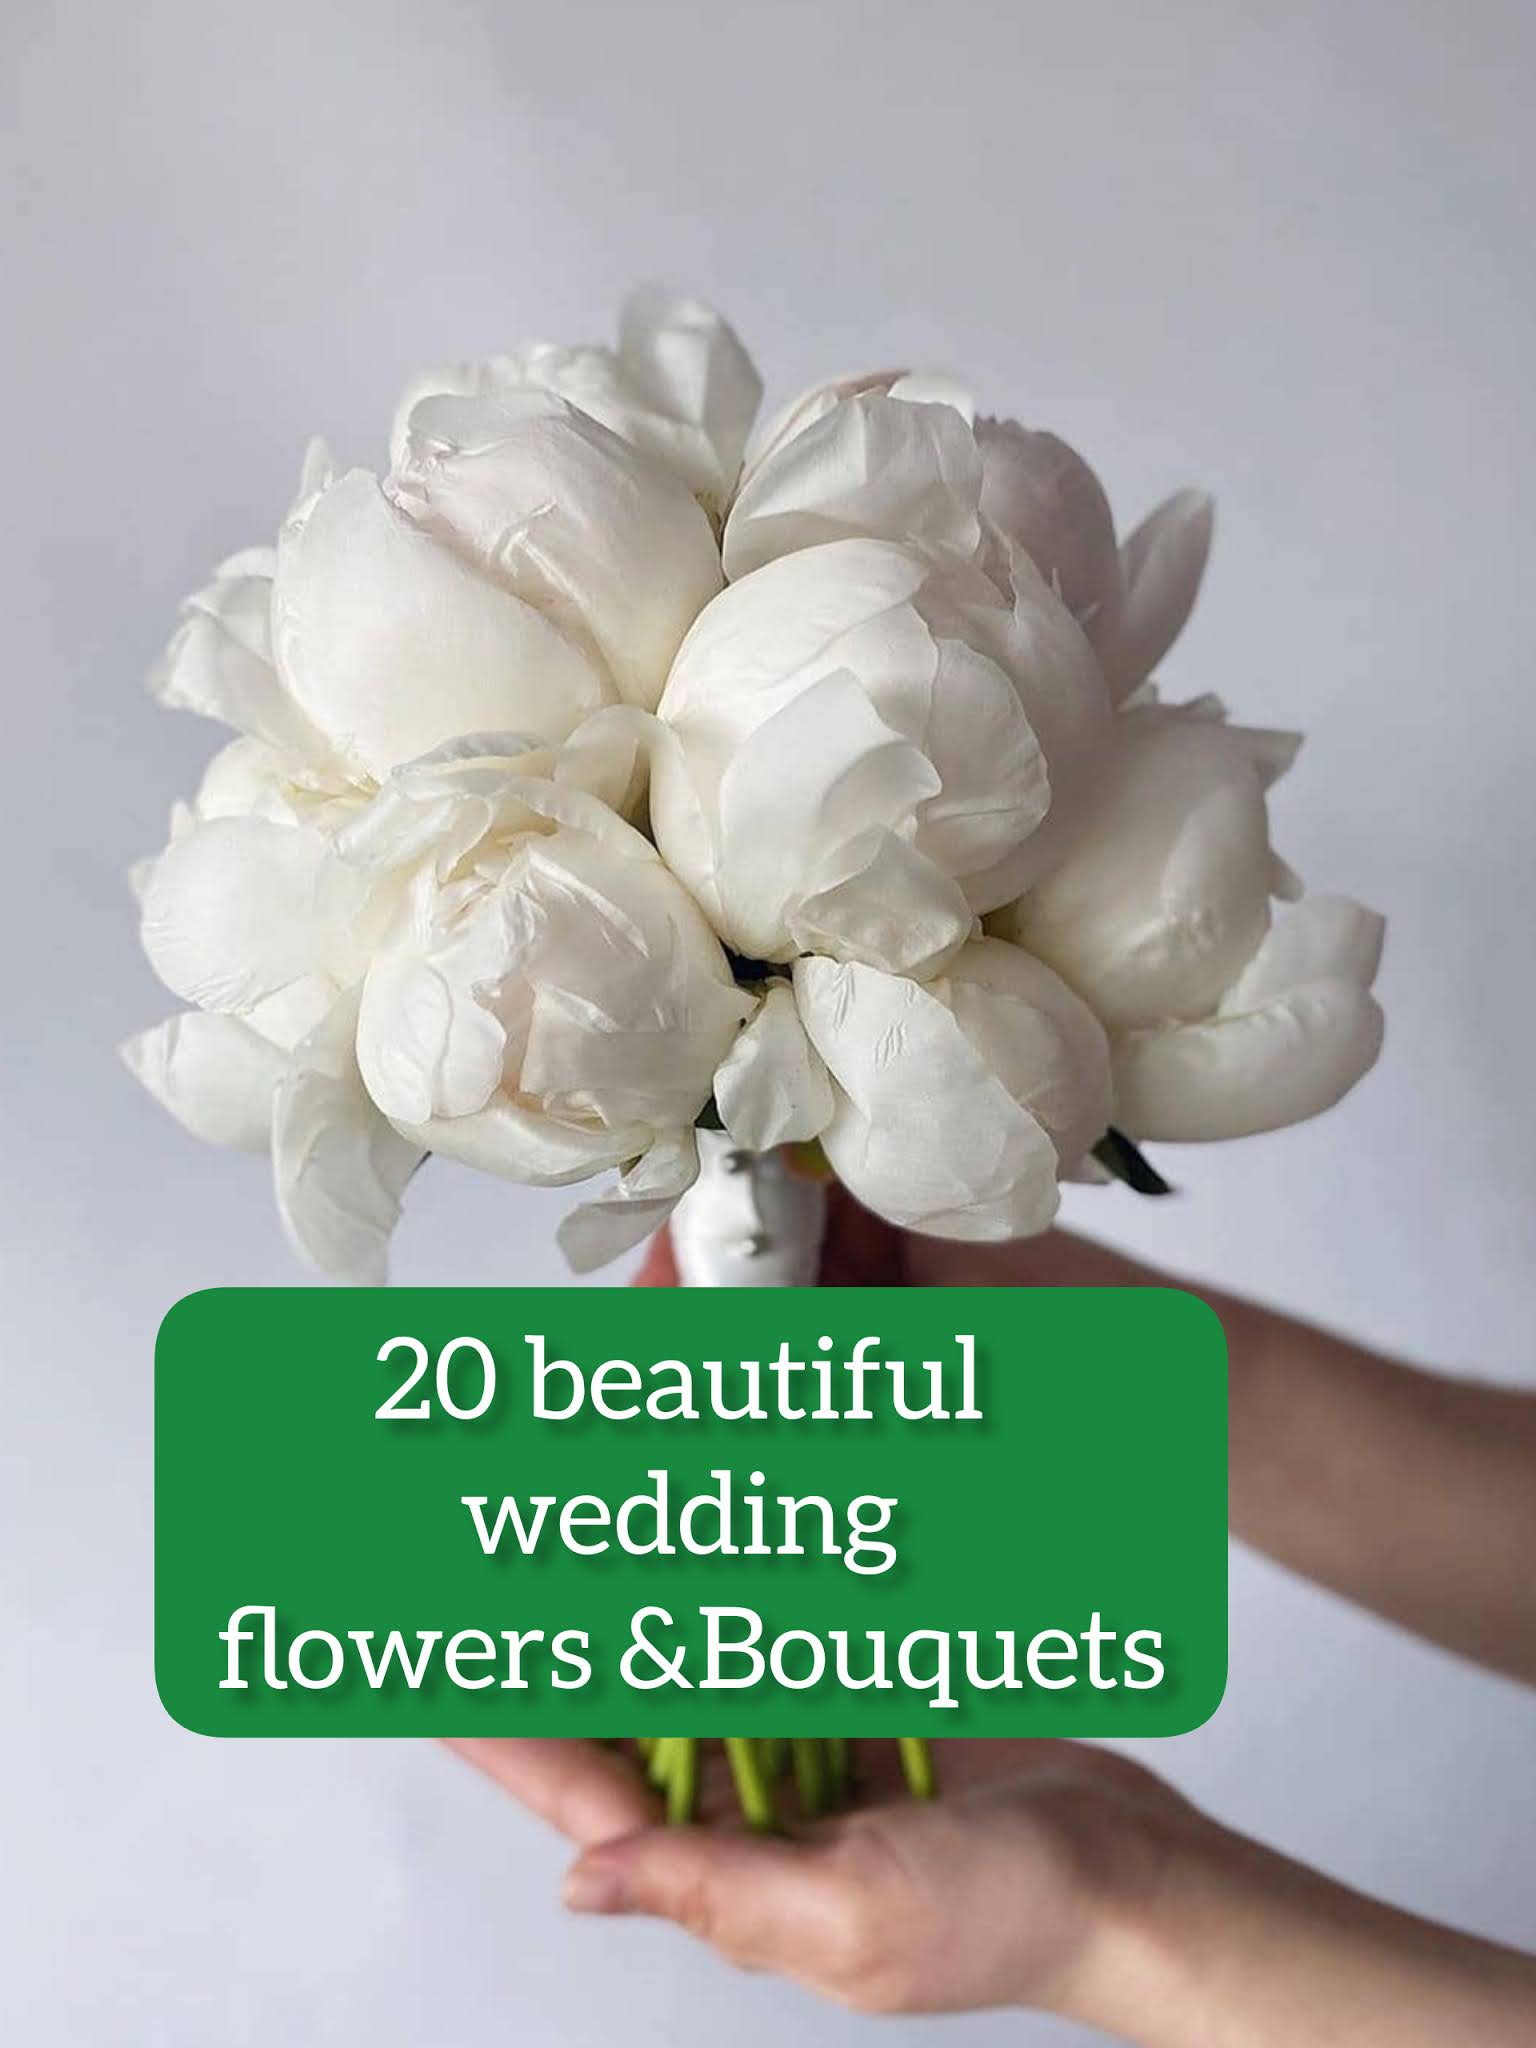 20 beautiful Wedding Flowers & Bouquets by Flowerna.ru